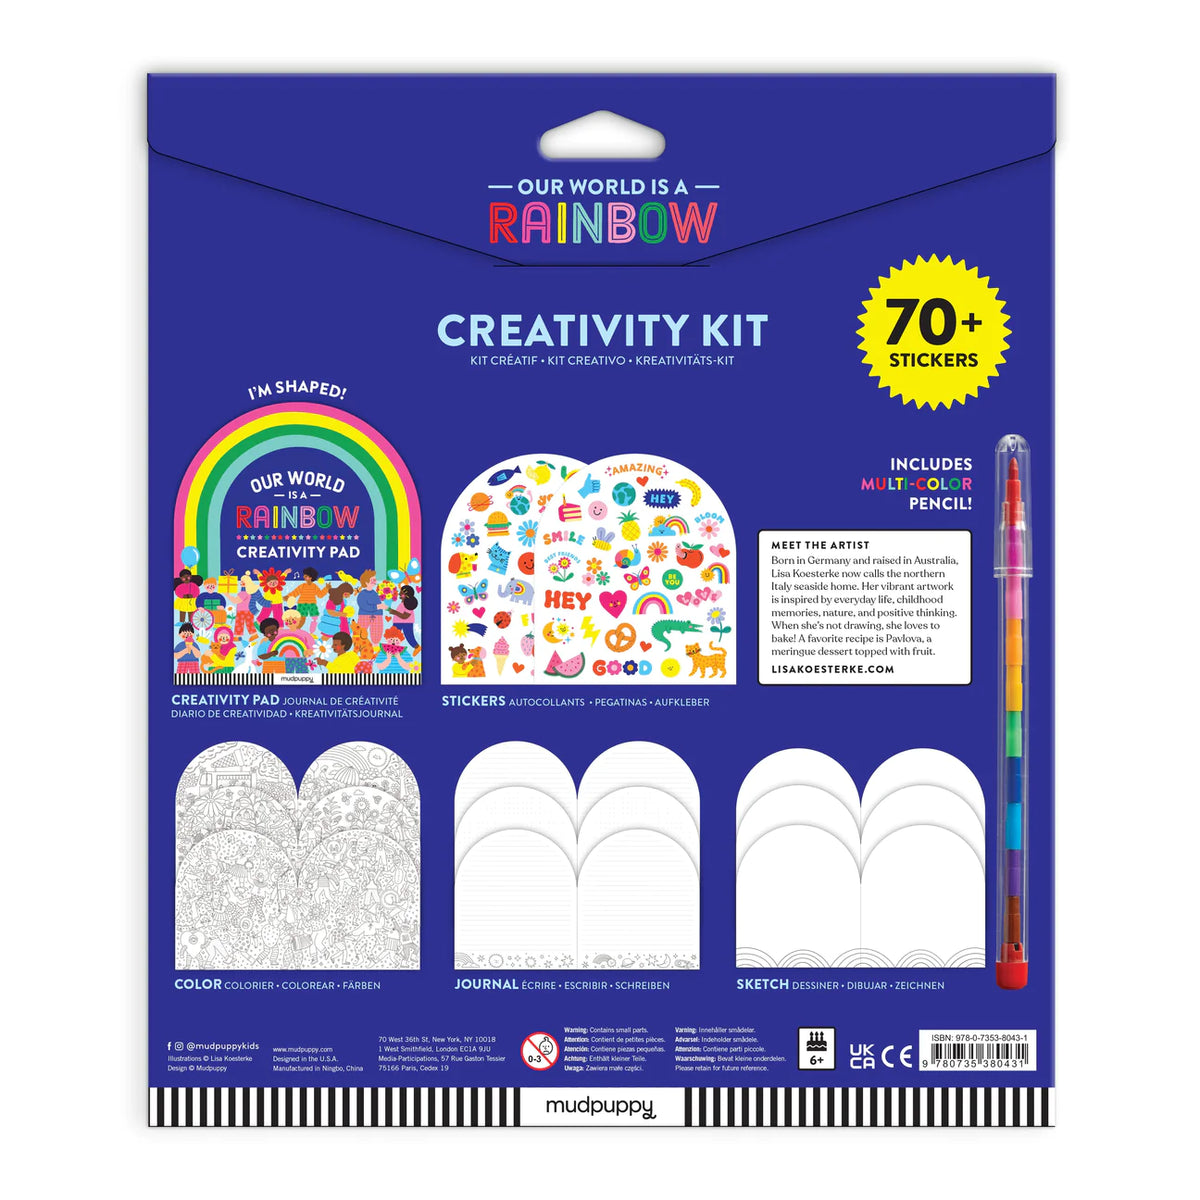 Our World is a Rainbow Creativity Kit Cover